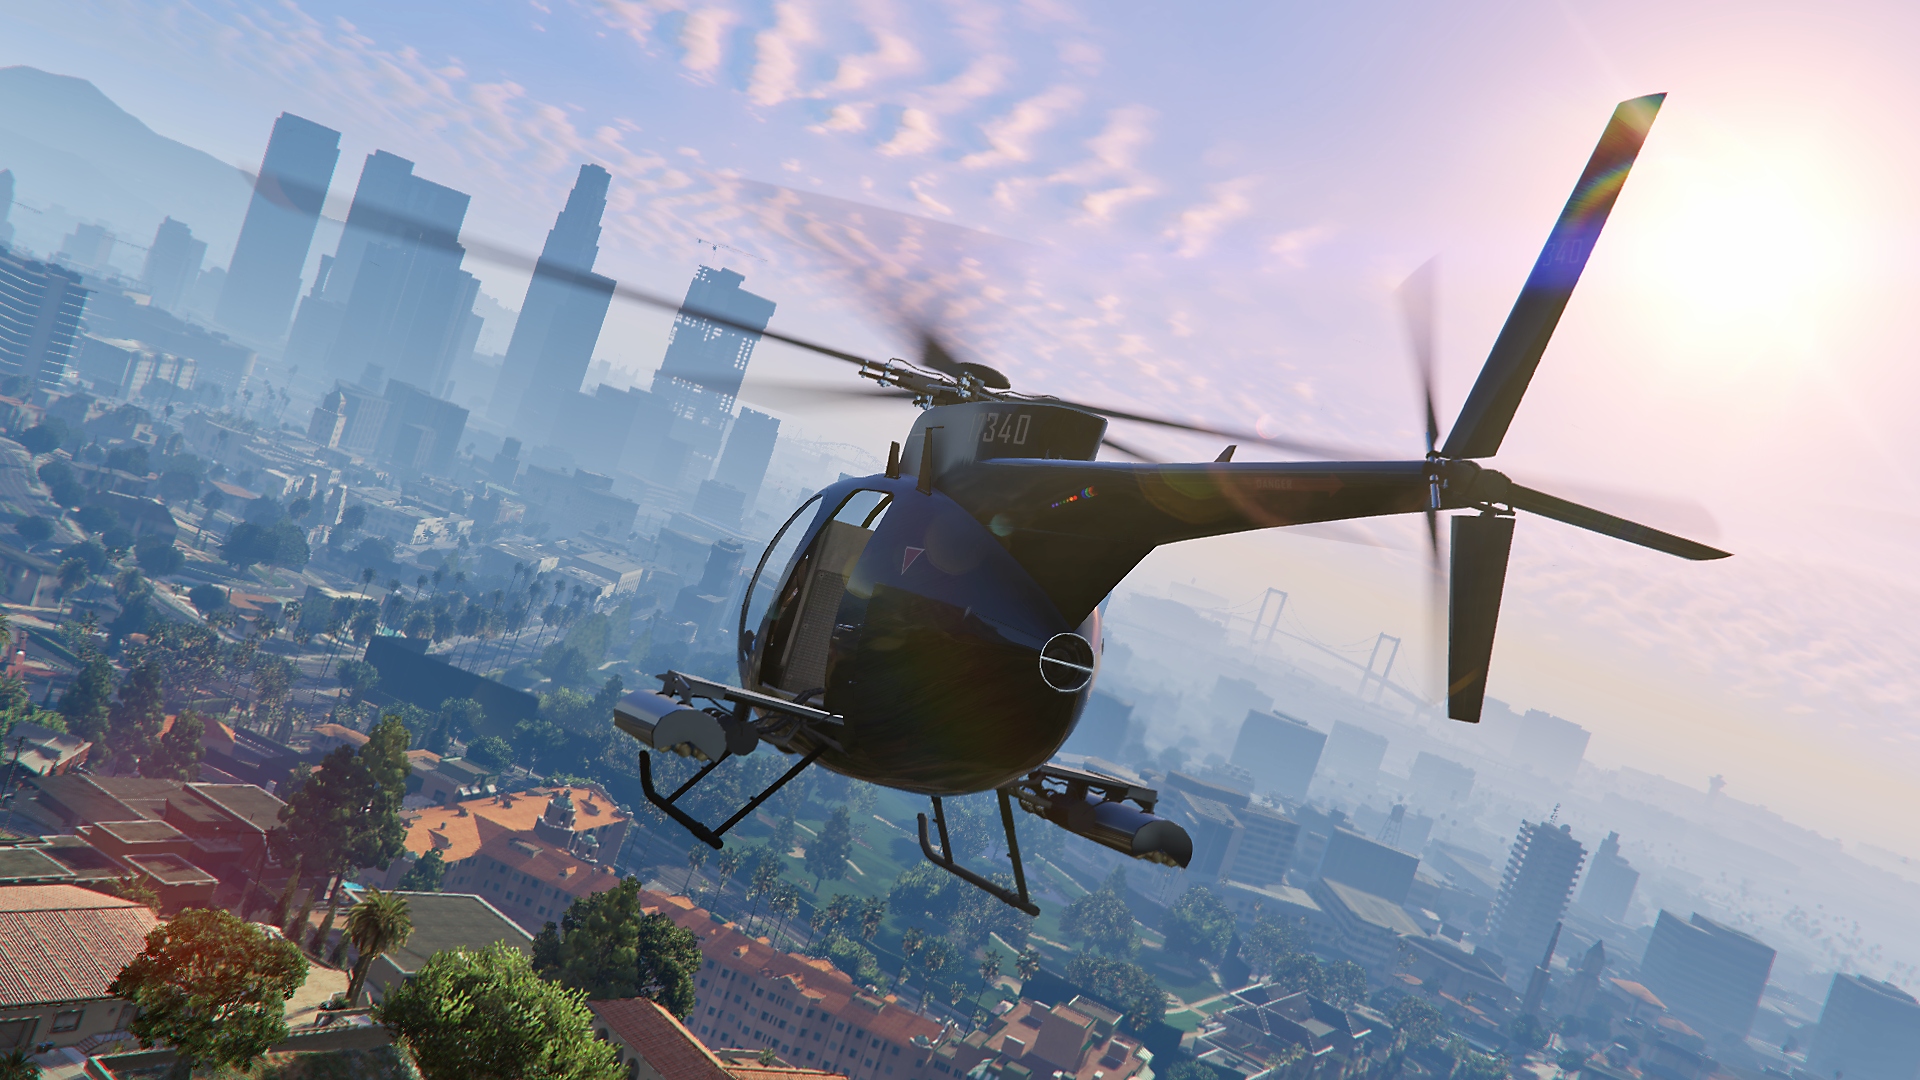 《Grand Theft Auto V》螢幕截圖，顯示一架直昇機在遠處沿著城市天際線飛行